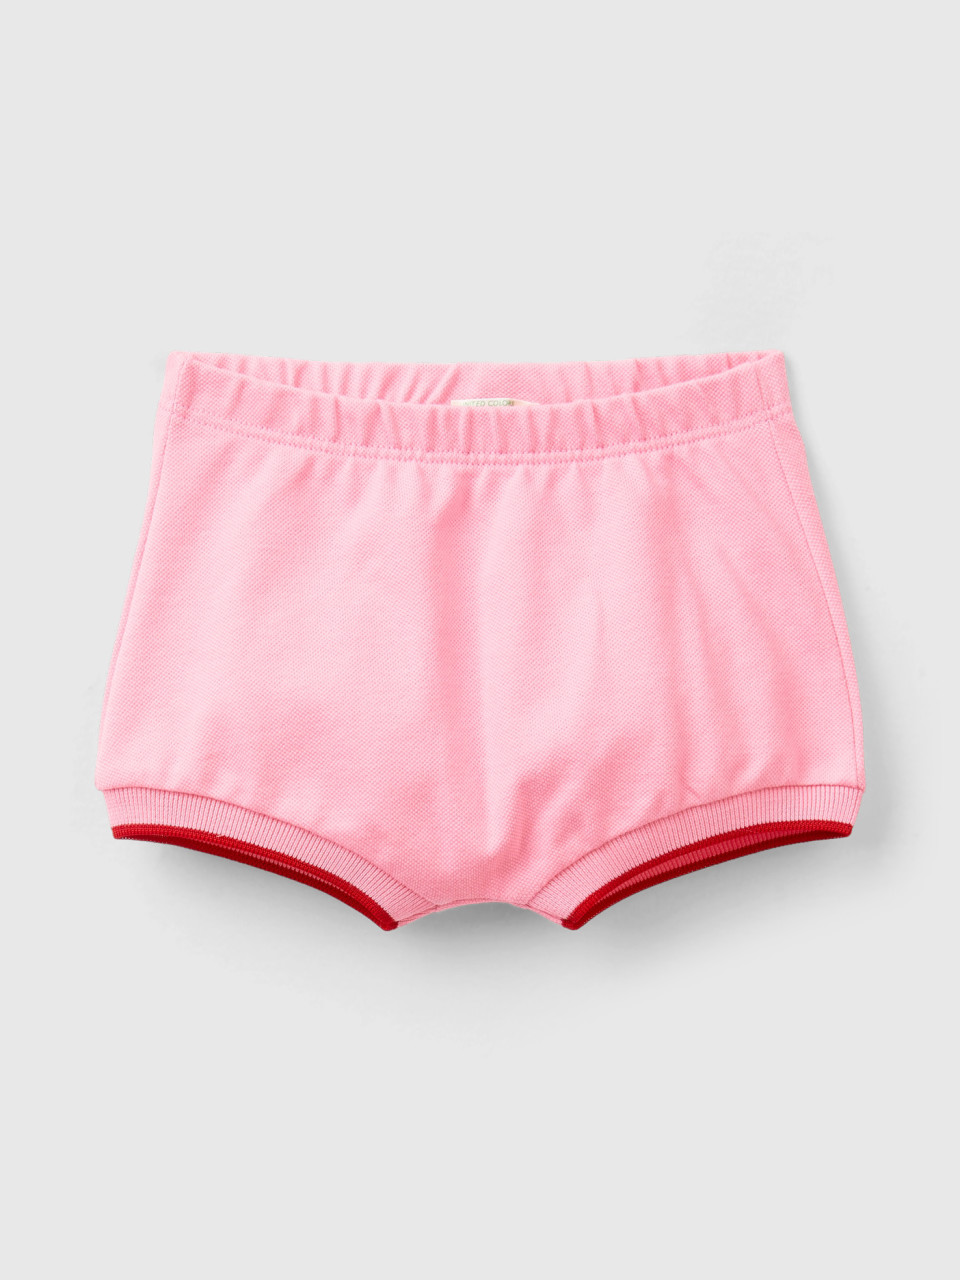 Benetton, Stretch Cotton Shorts, Pink, Kids